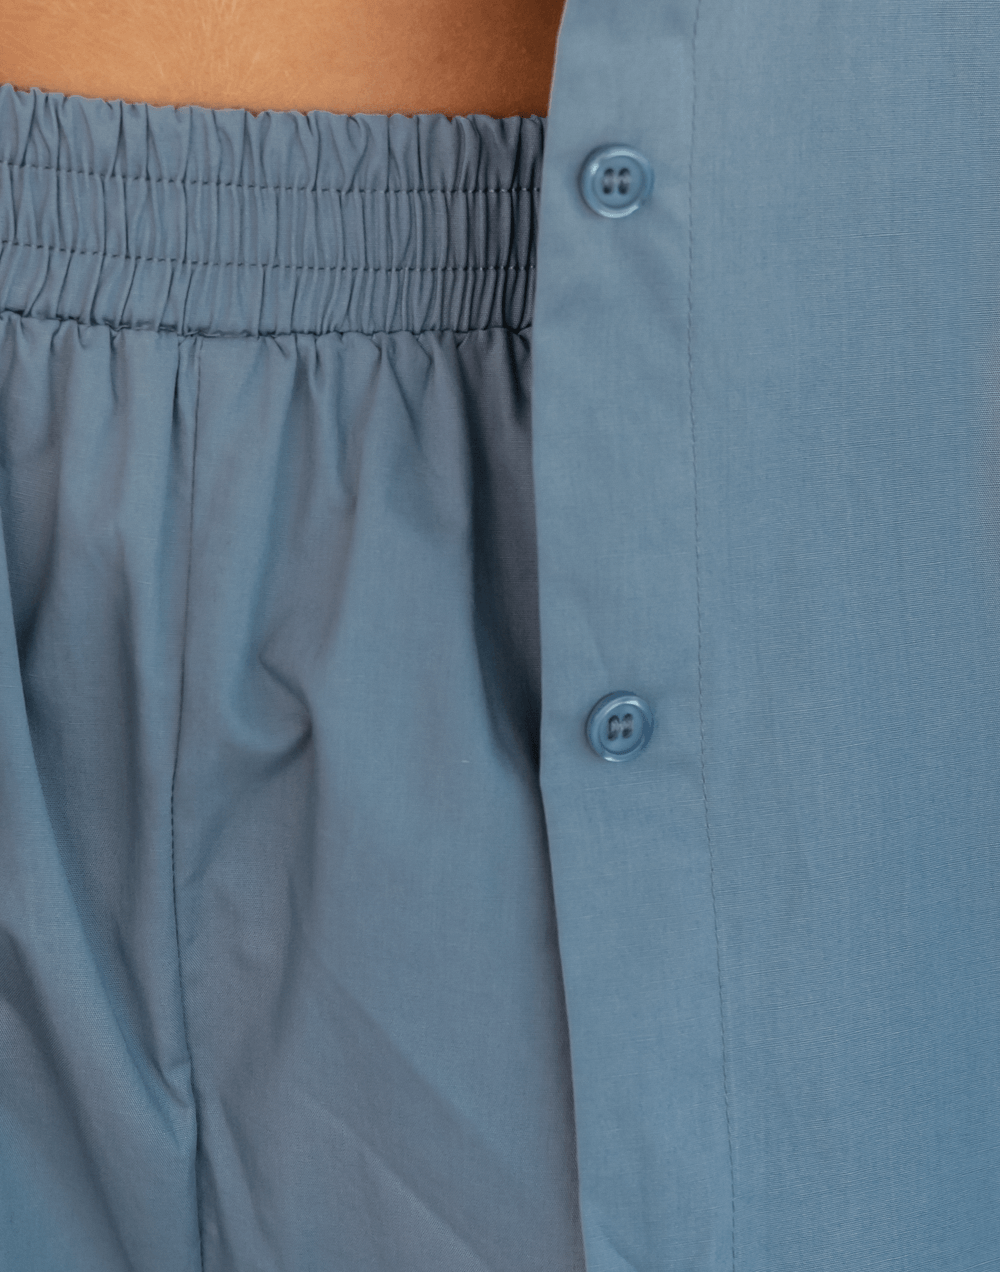 South Beach Shorts (Storm Blue) - High Waisted Shorts - Women's Shorts - Charcoal Clothing